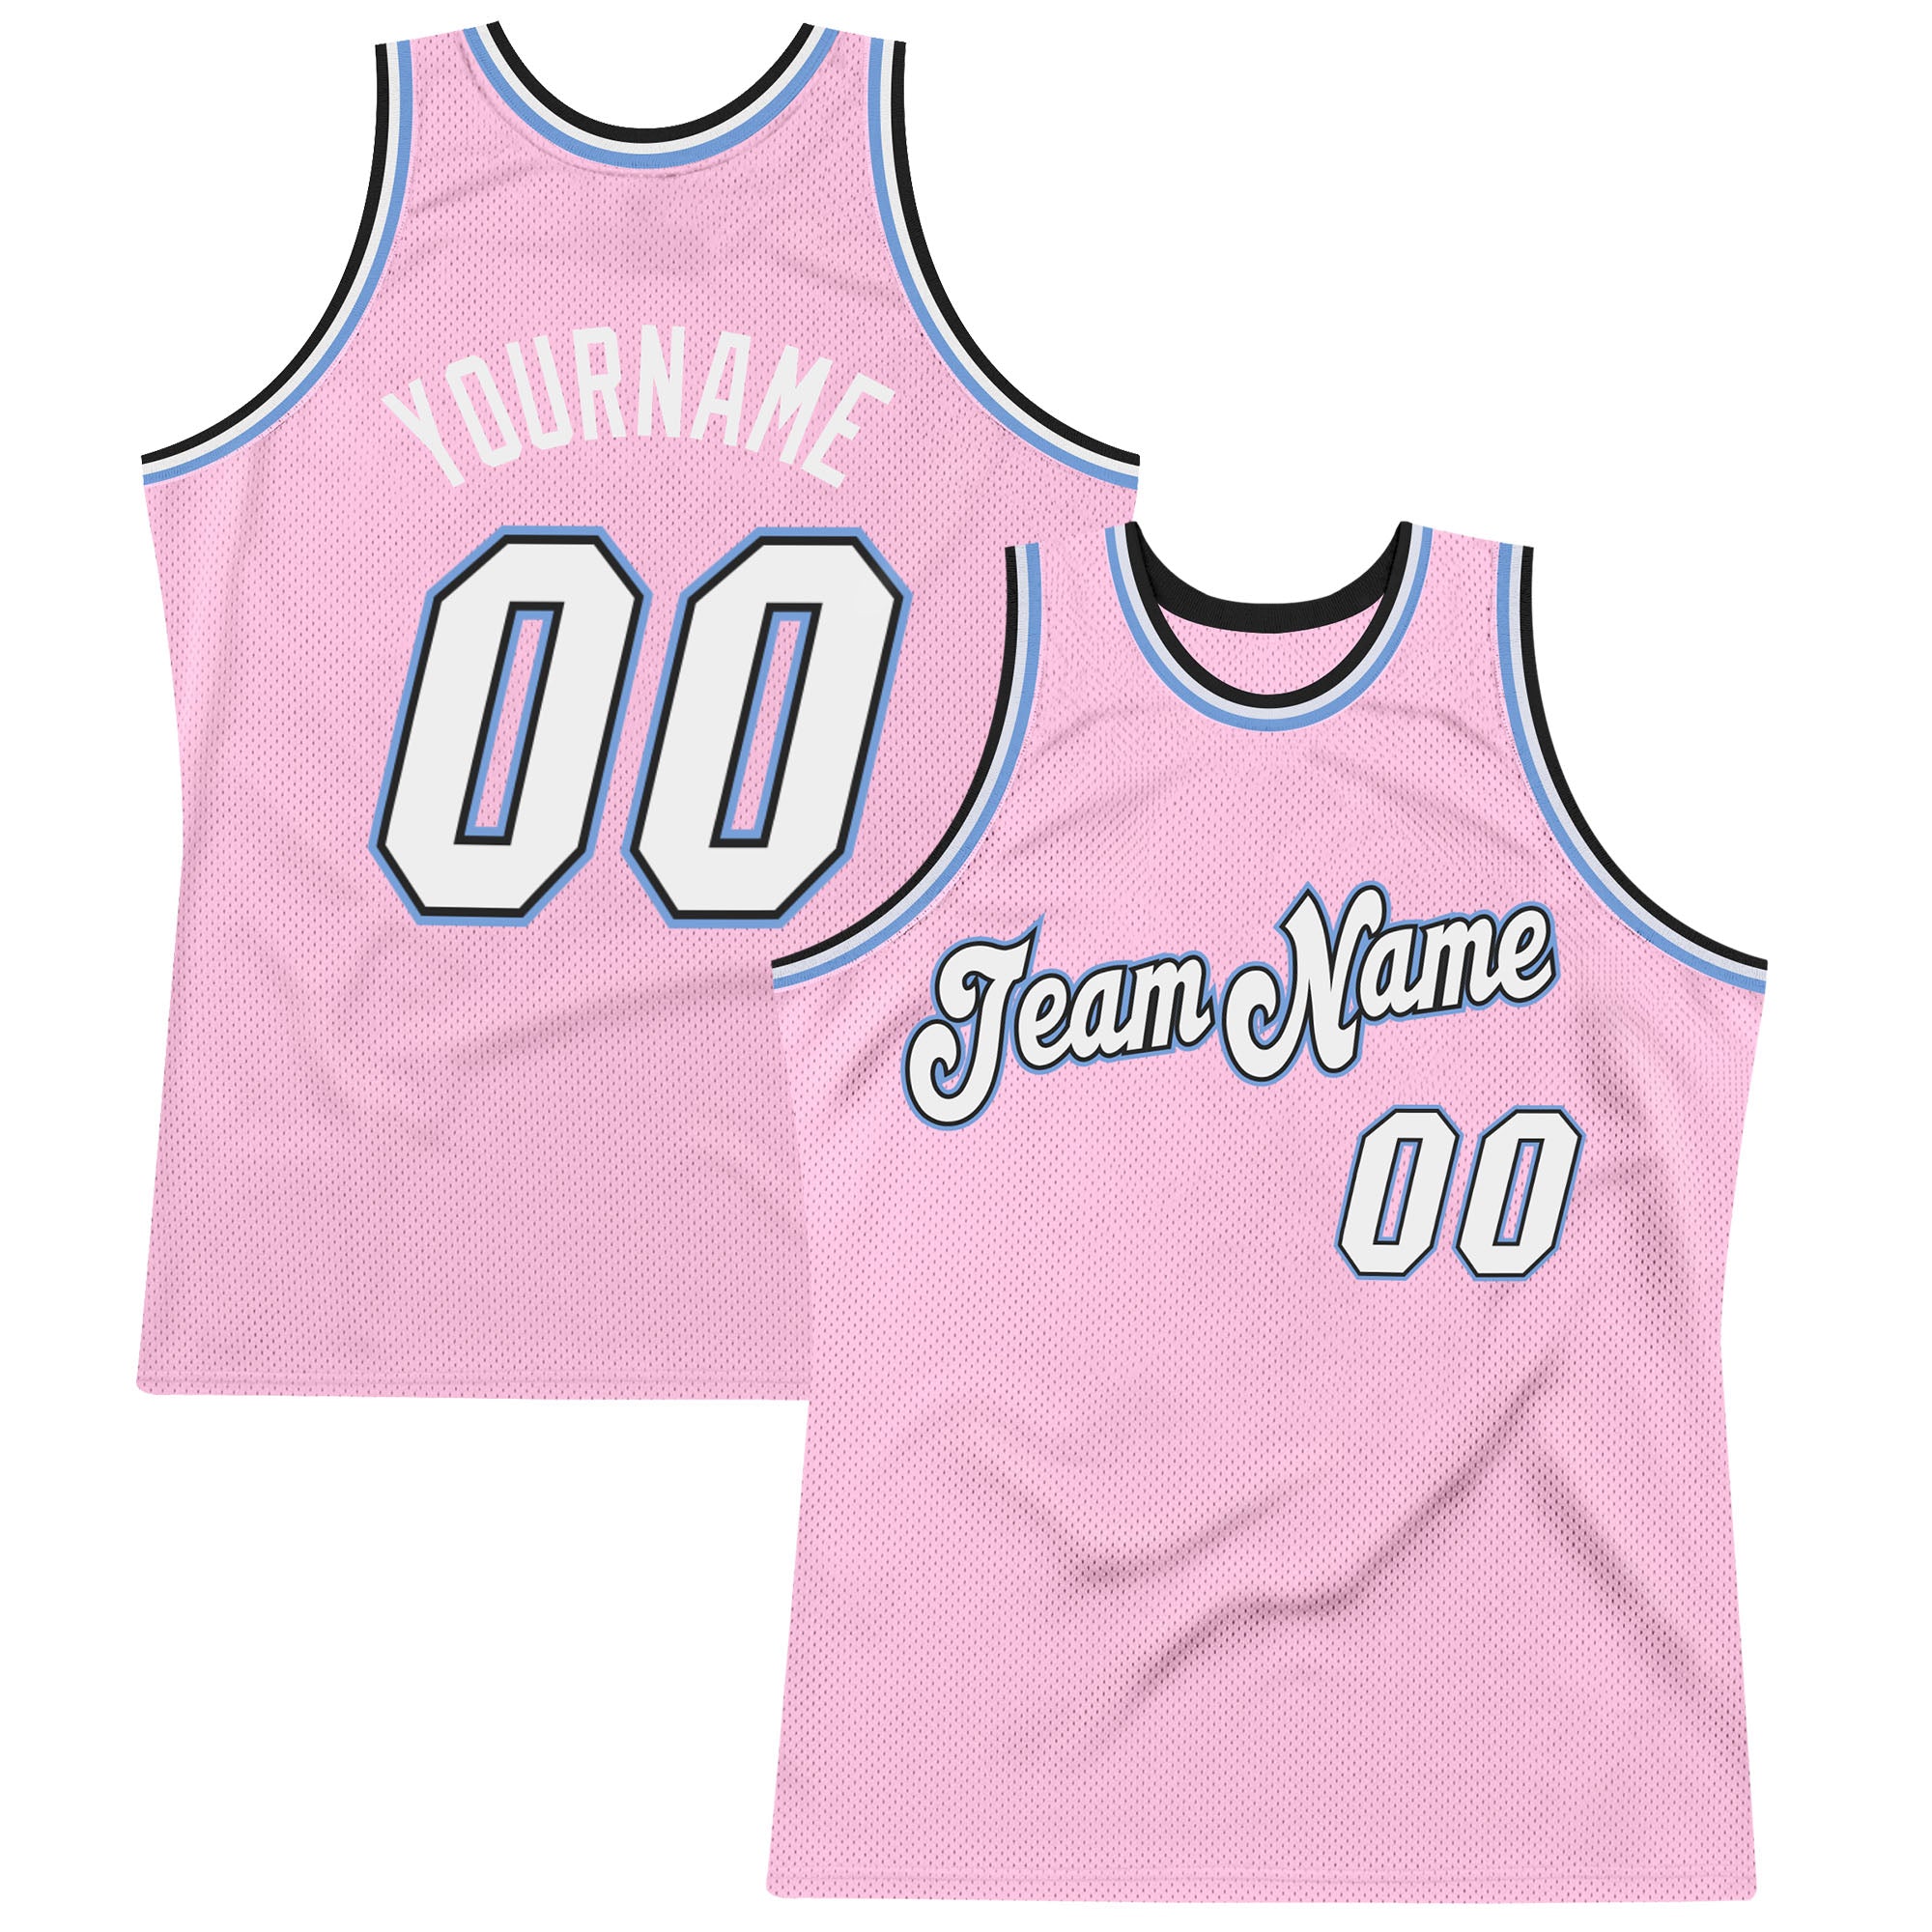 Custom Light Pink White-Light Blue Authentic Throwback Basketball